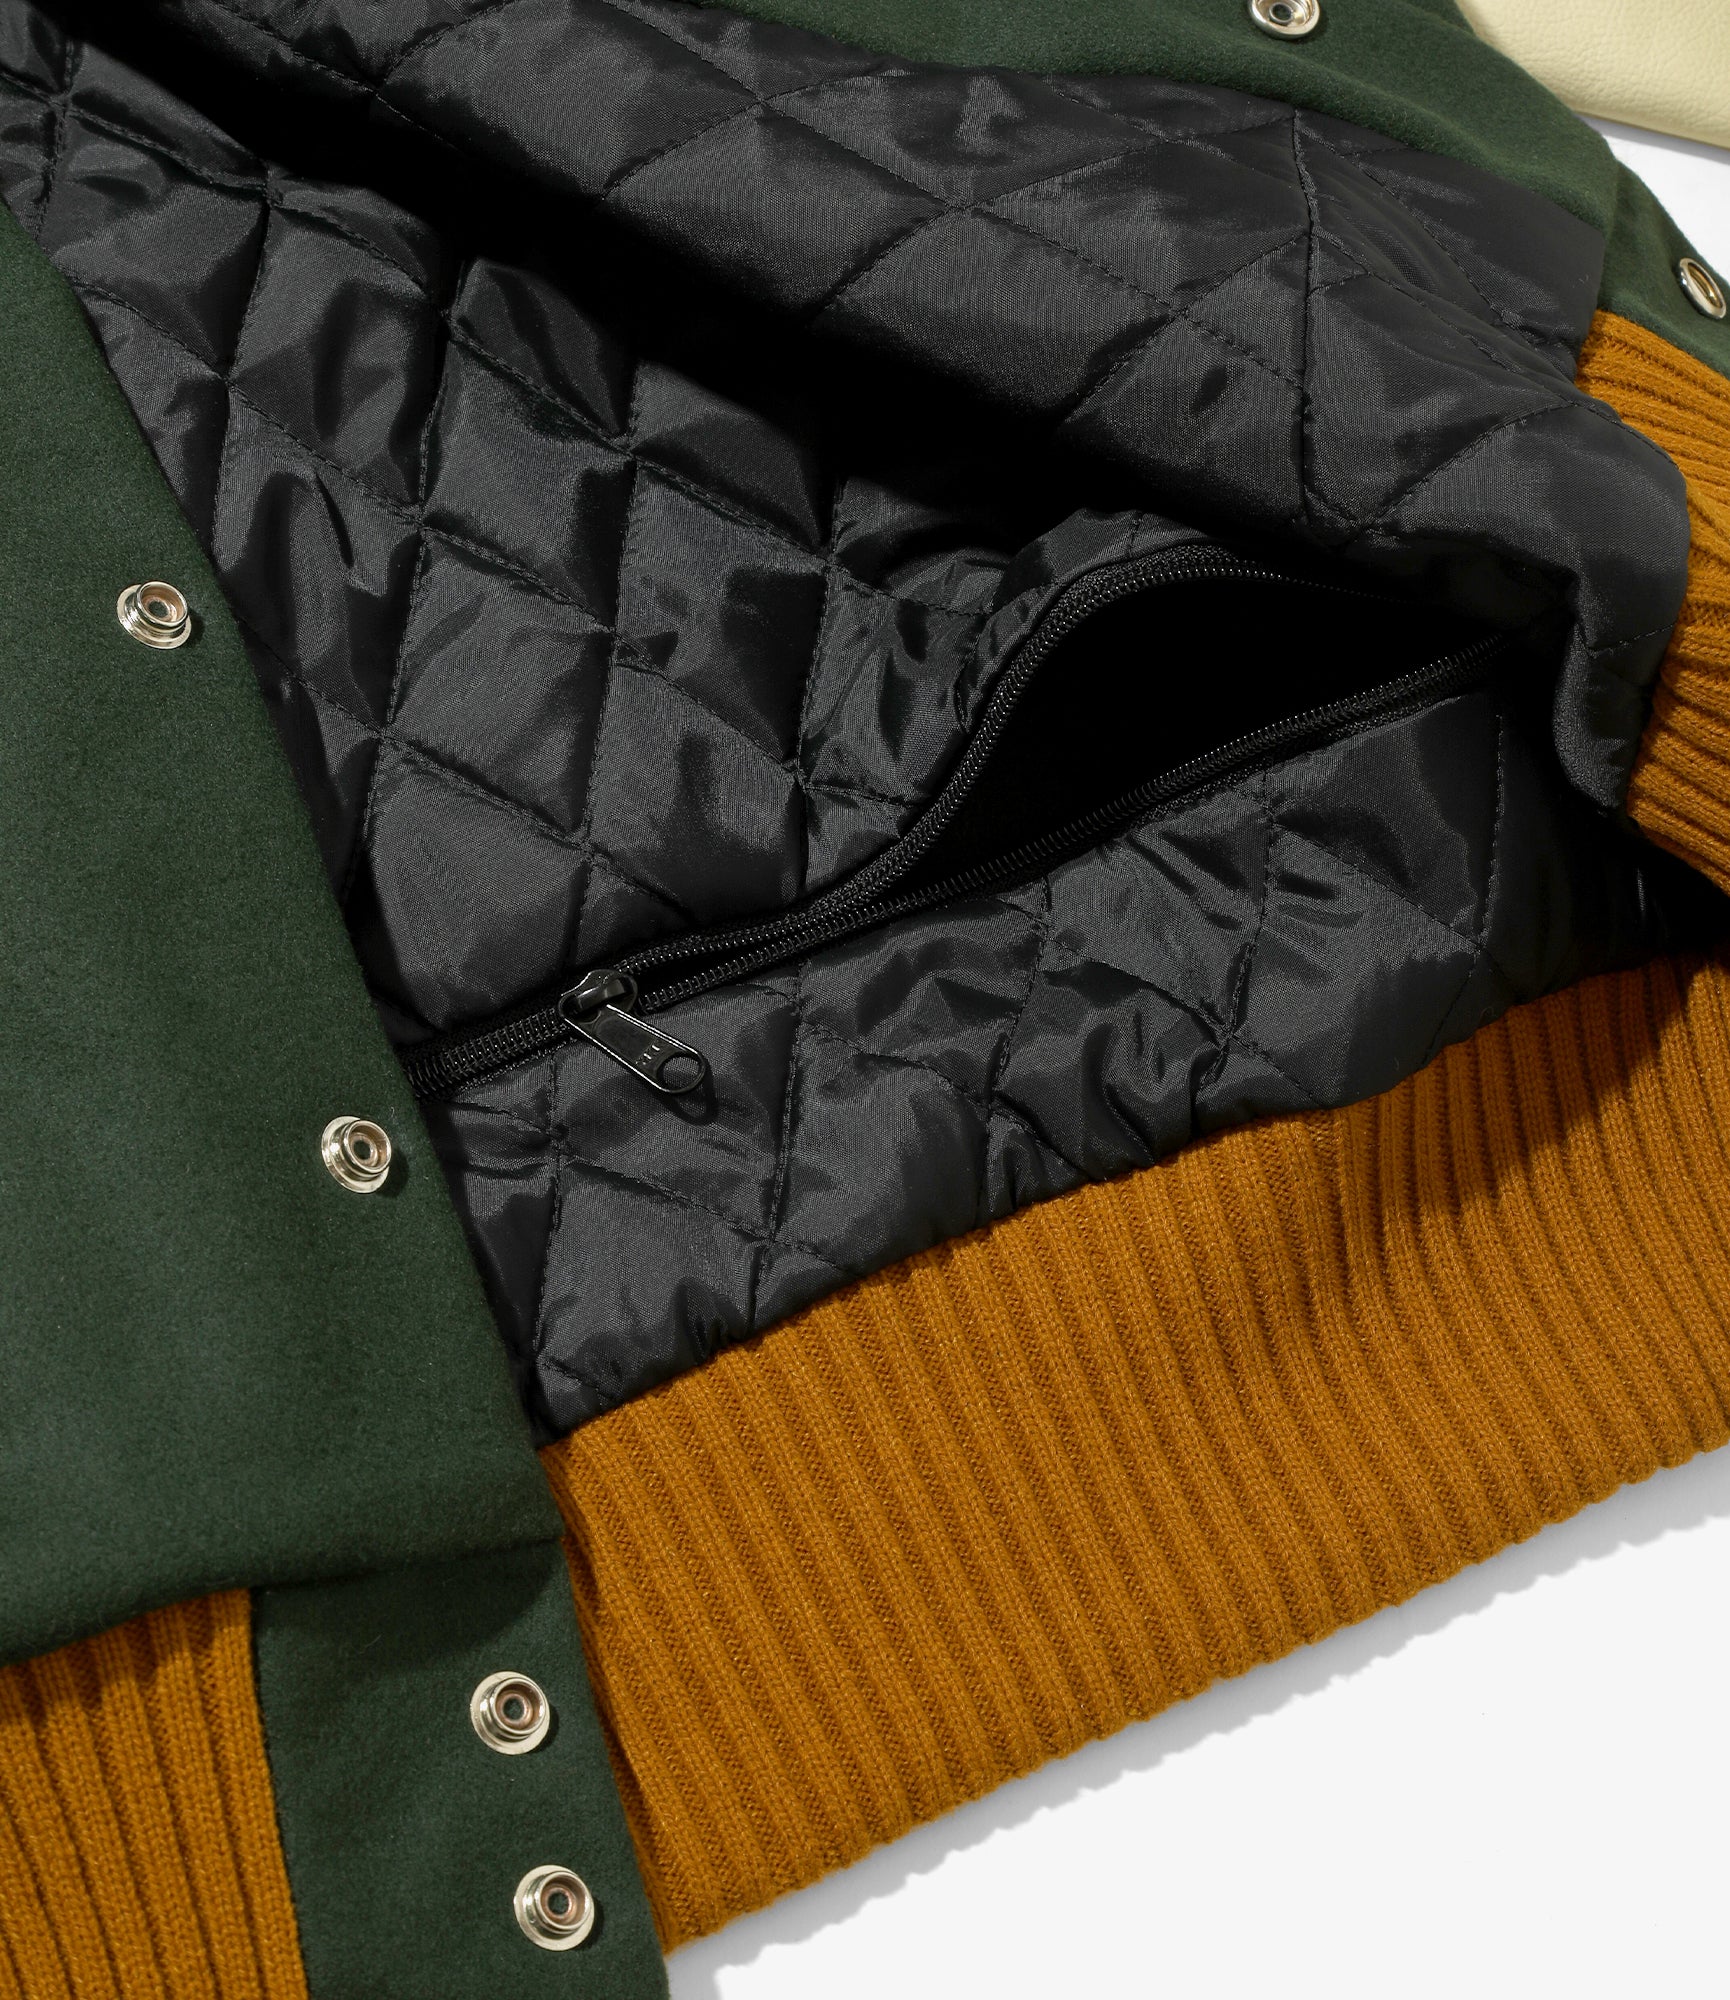 Engineered Garments Varsity Jacket - Olive Wool Melton